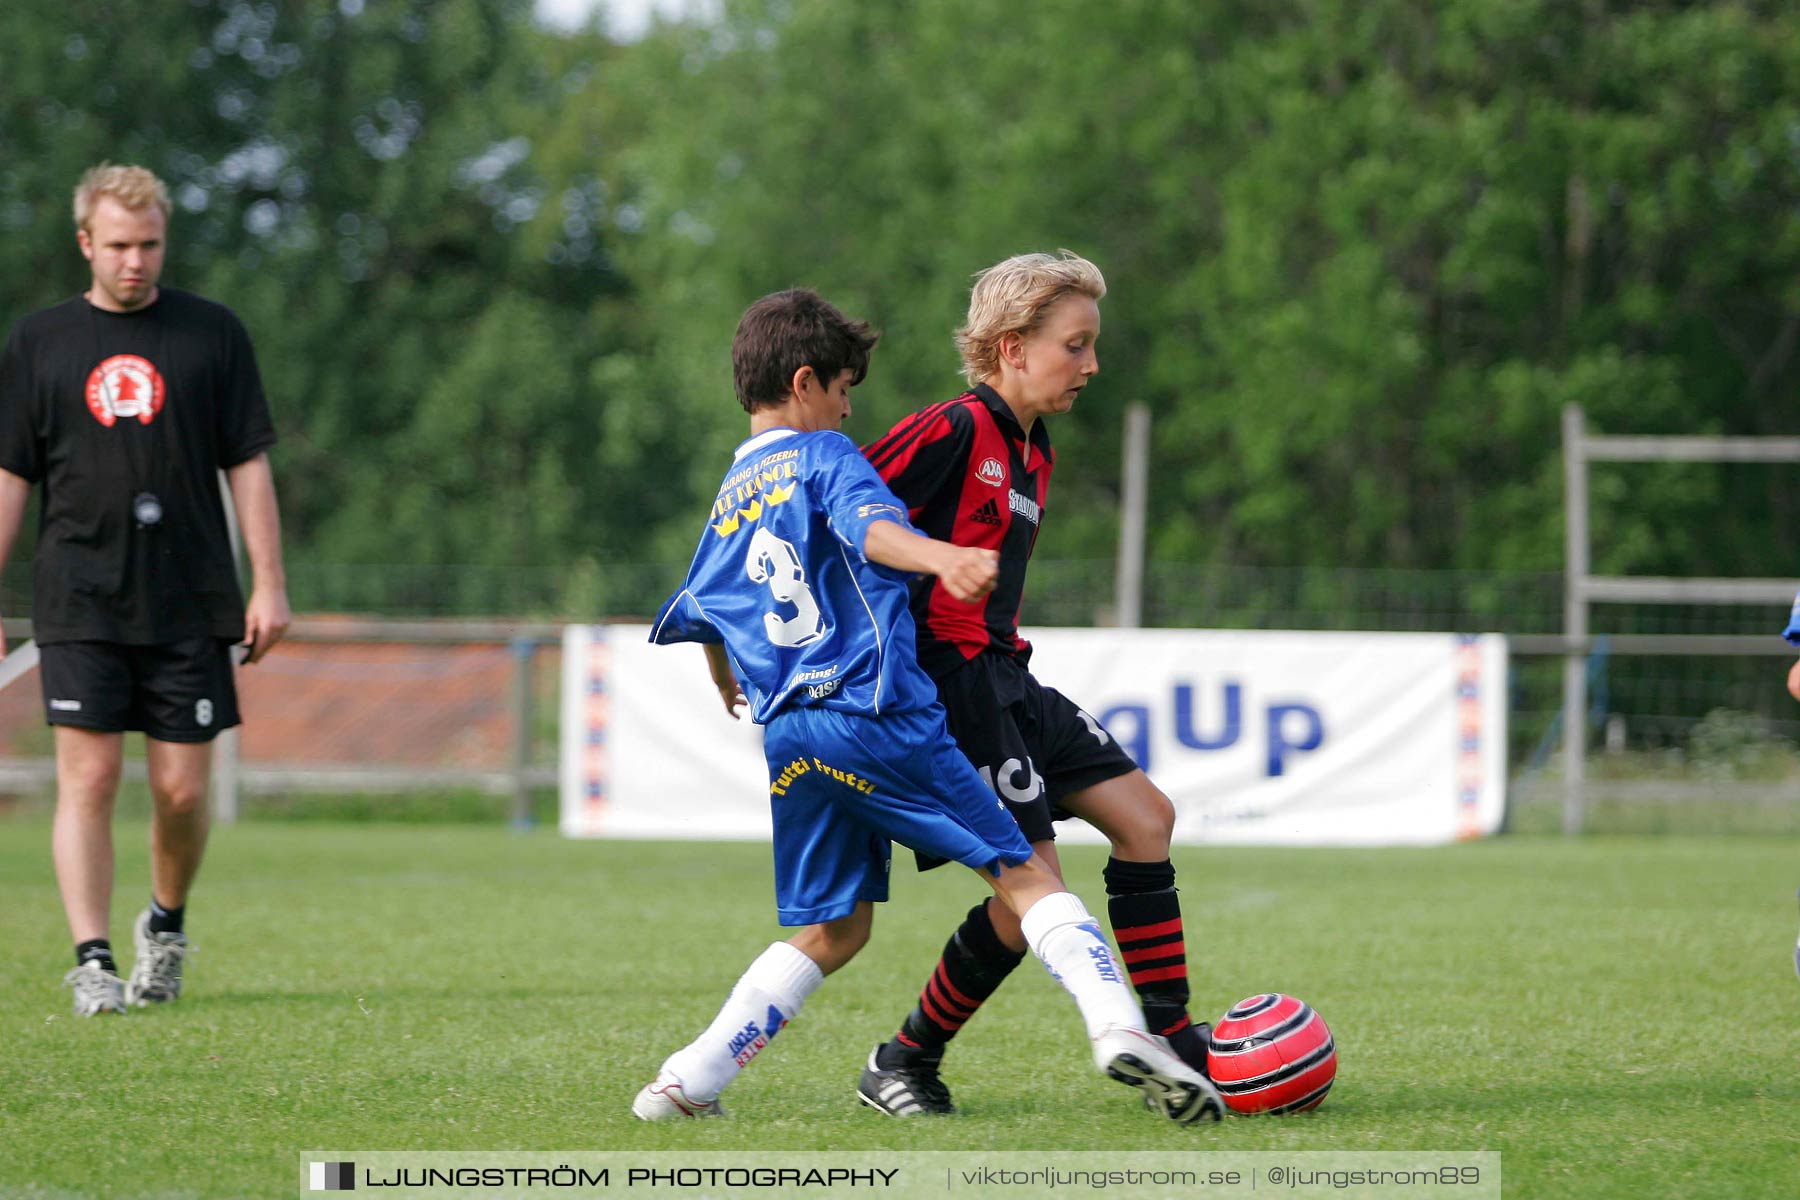 Ulvacupen 2006,mix,Åbrovallen,Ulvåker,Sverige,Fotboll,,2006,147456